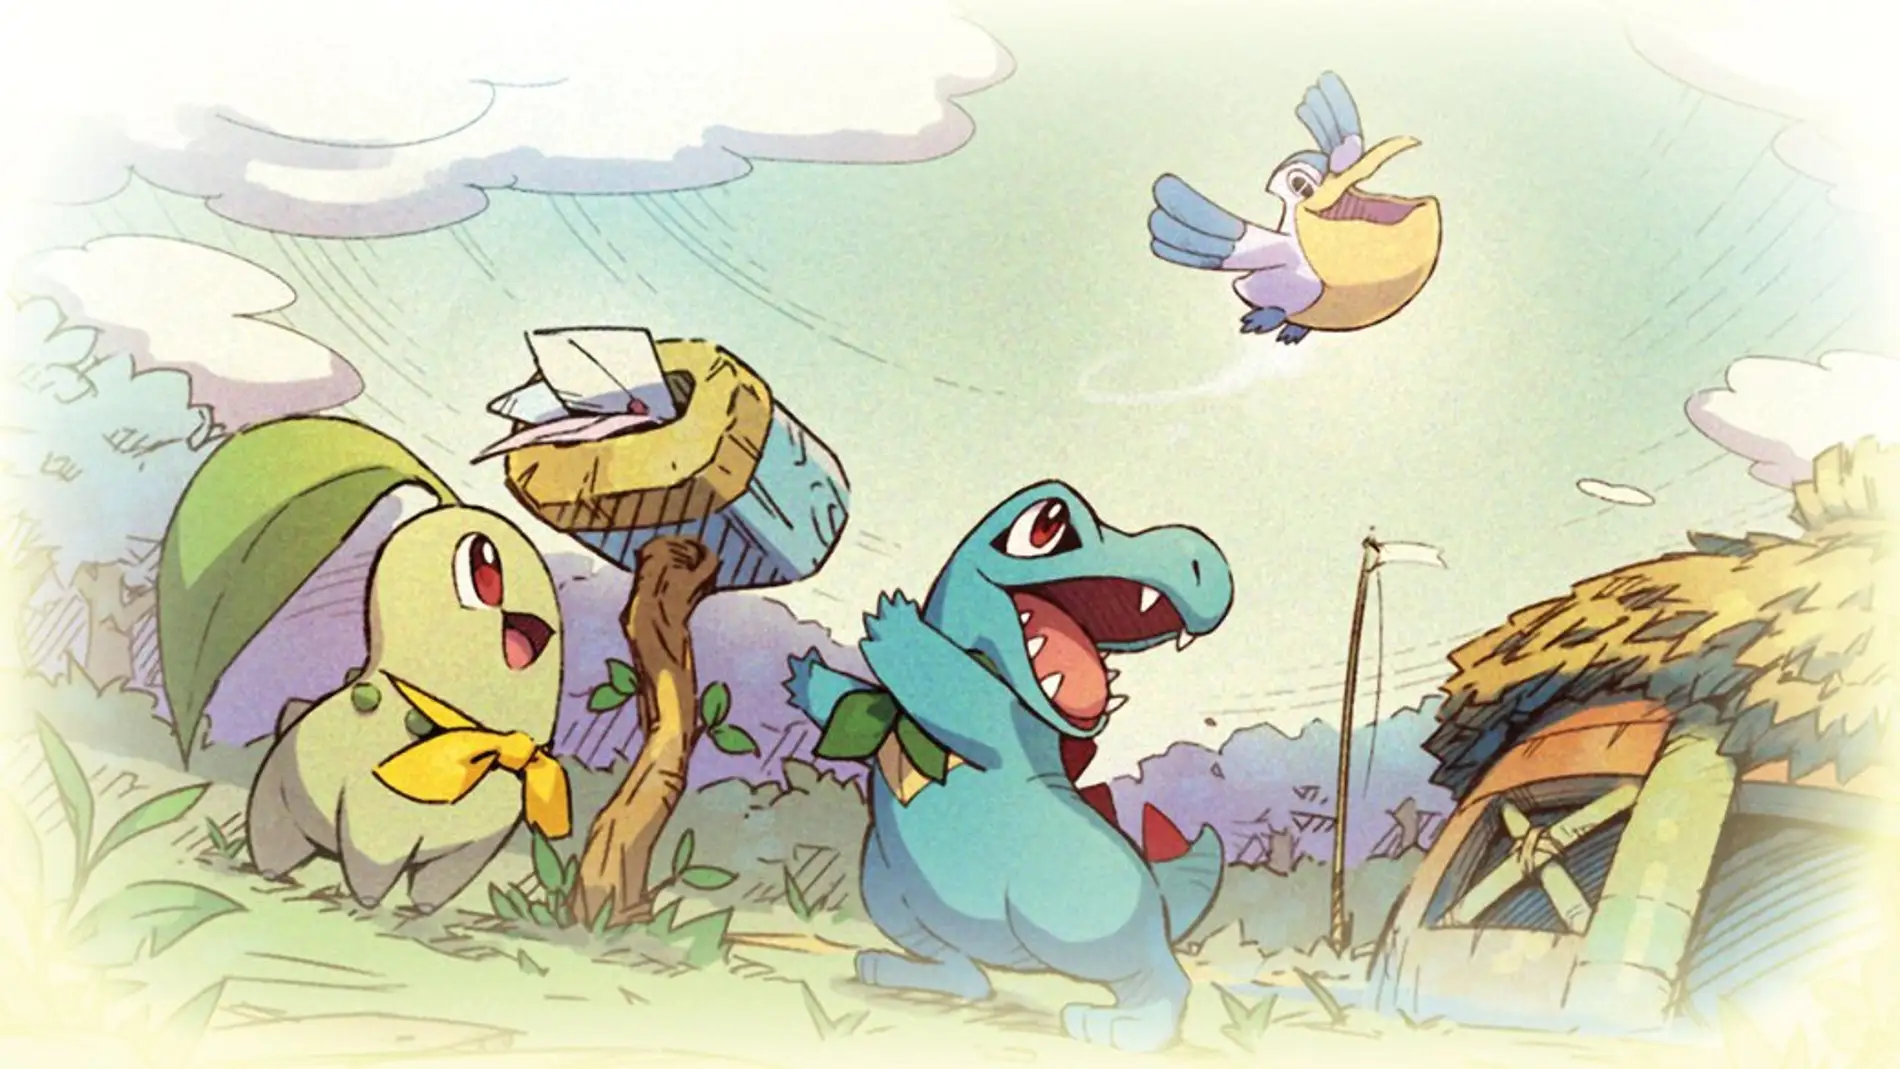 Pokémon Mundo Misterioso: Equipo de Rescate DX